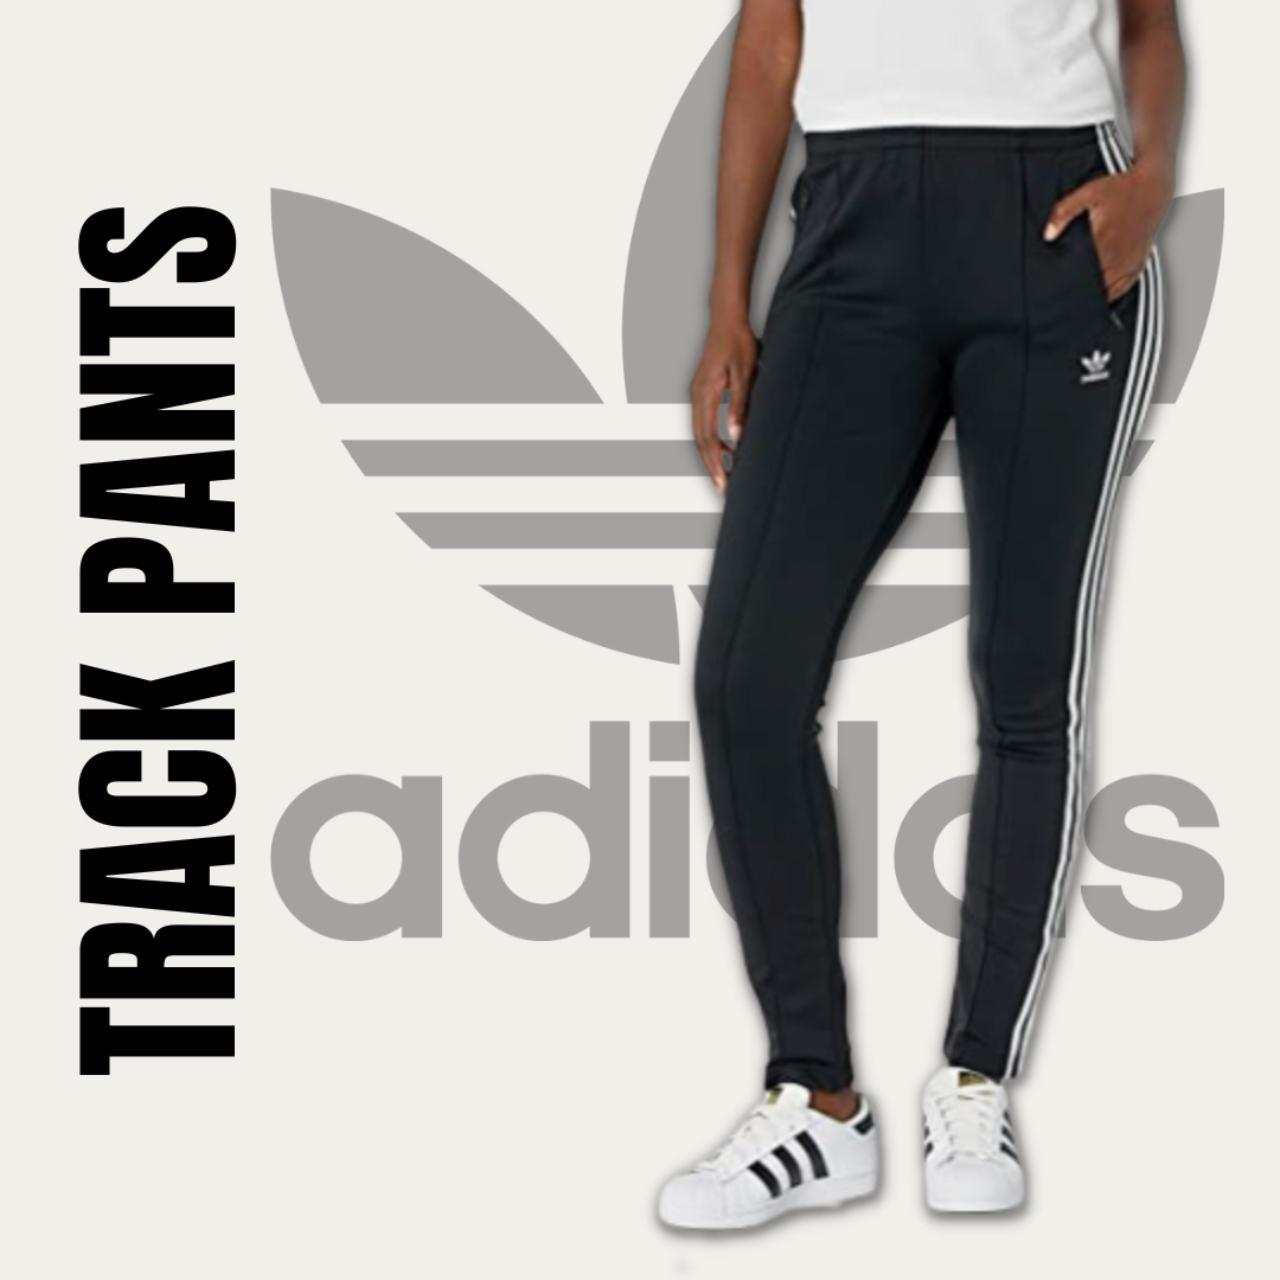  adidas Originals Women's Superstar Track Pants, Black